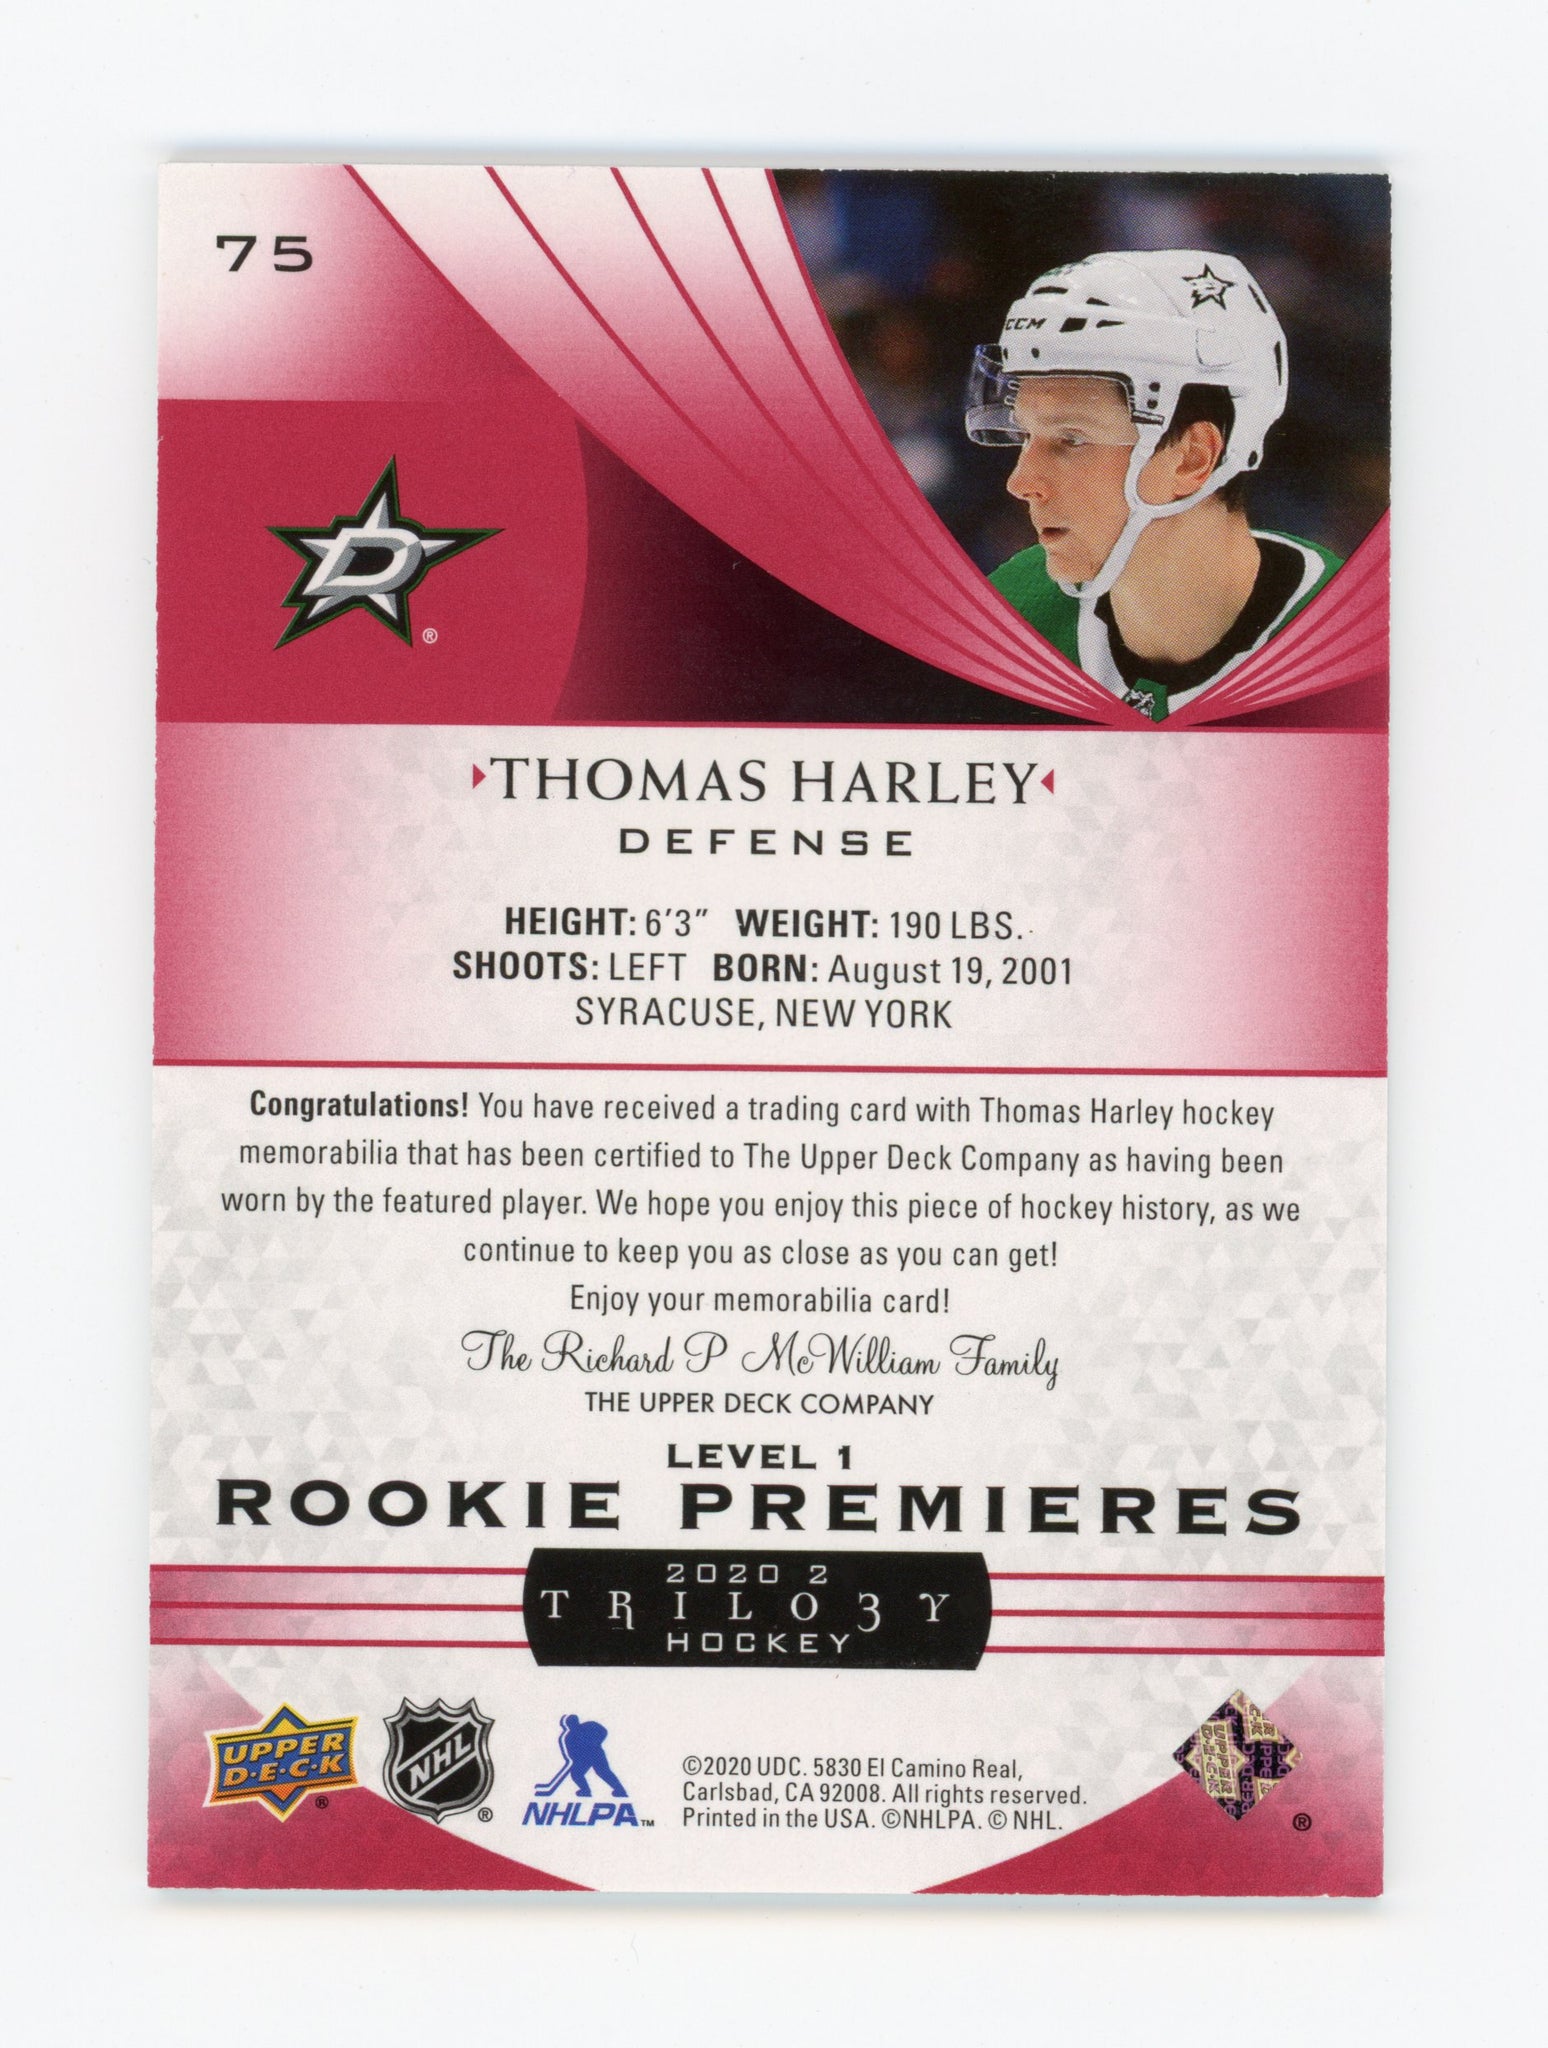 2020-2021 Thomas Harley Rookie Premiers #d /499 Trilogy Dallas Stars #75